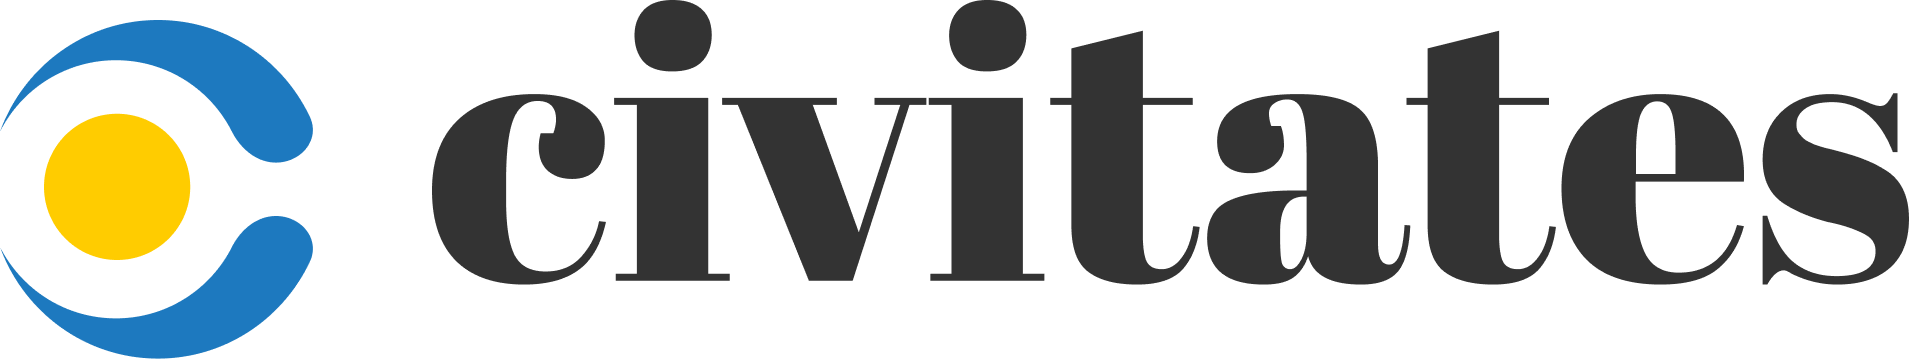 Logo onlight civitates